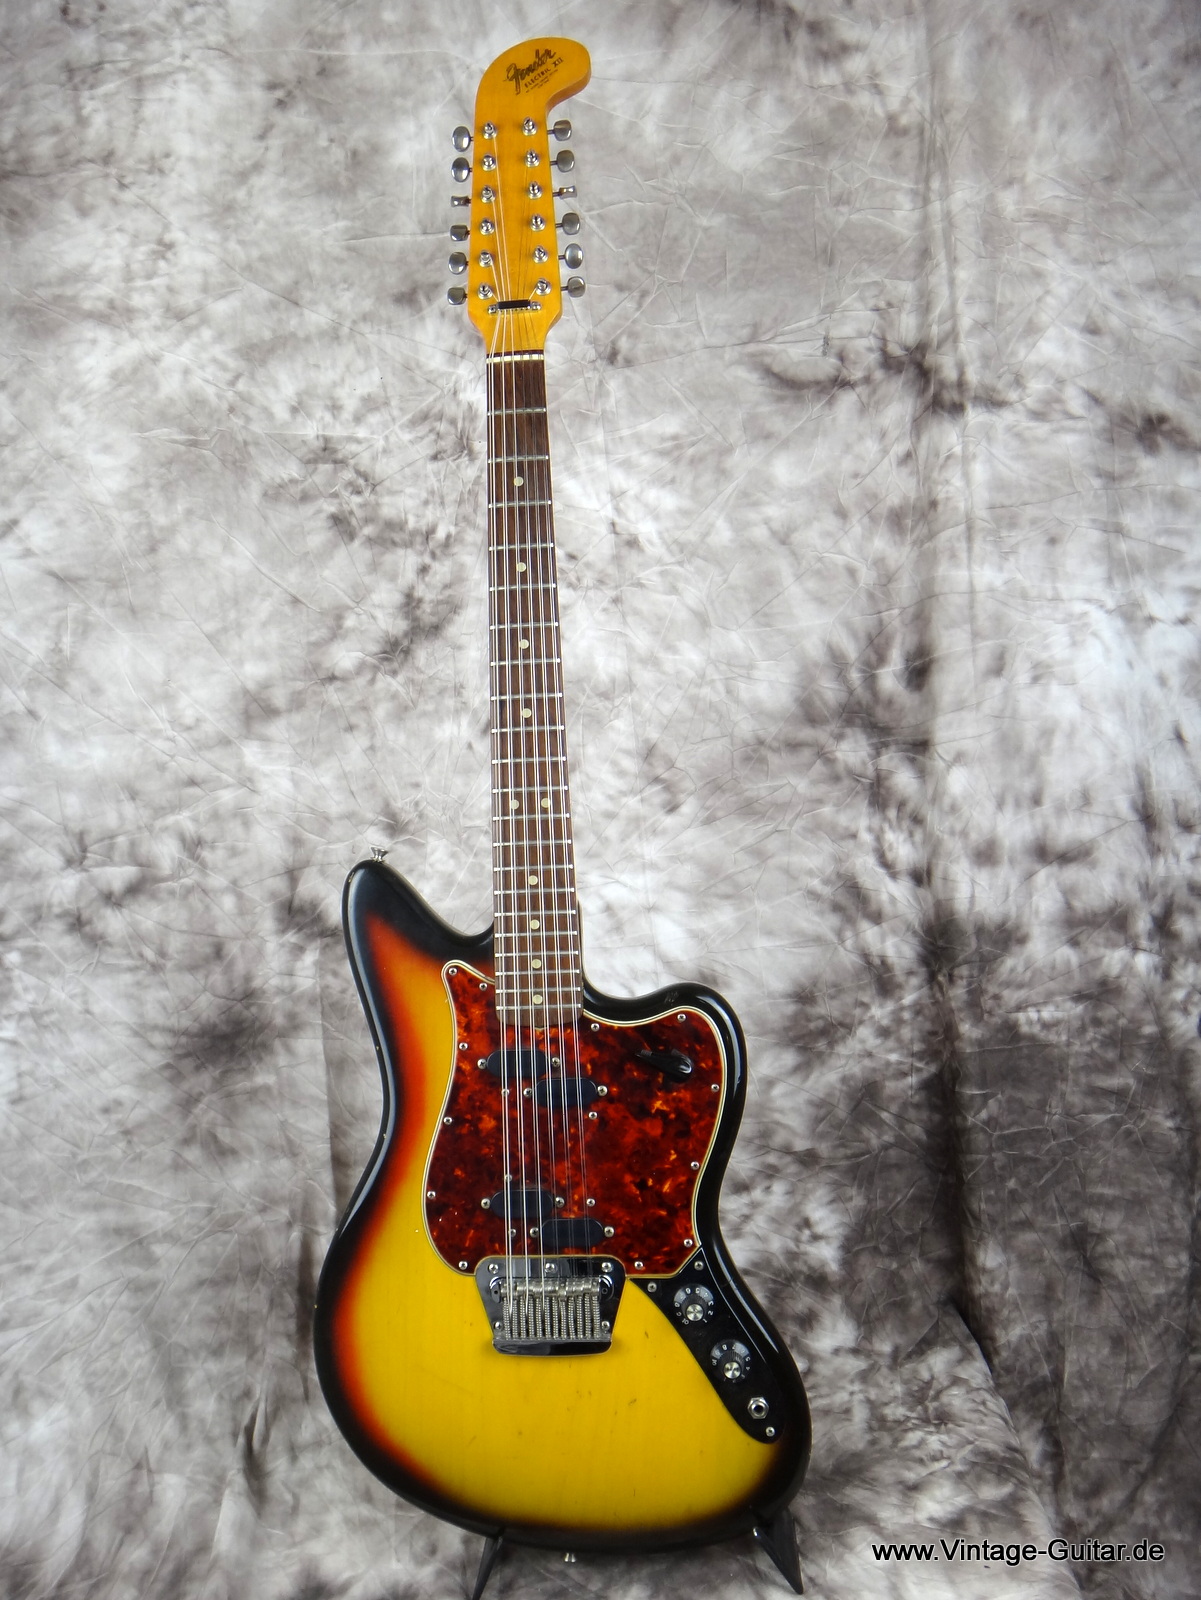 Fender-Electric-XXII-12-string-guitar-1966-sunburst-010.JPG